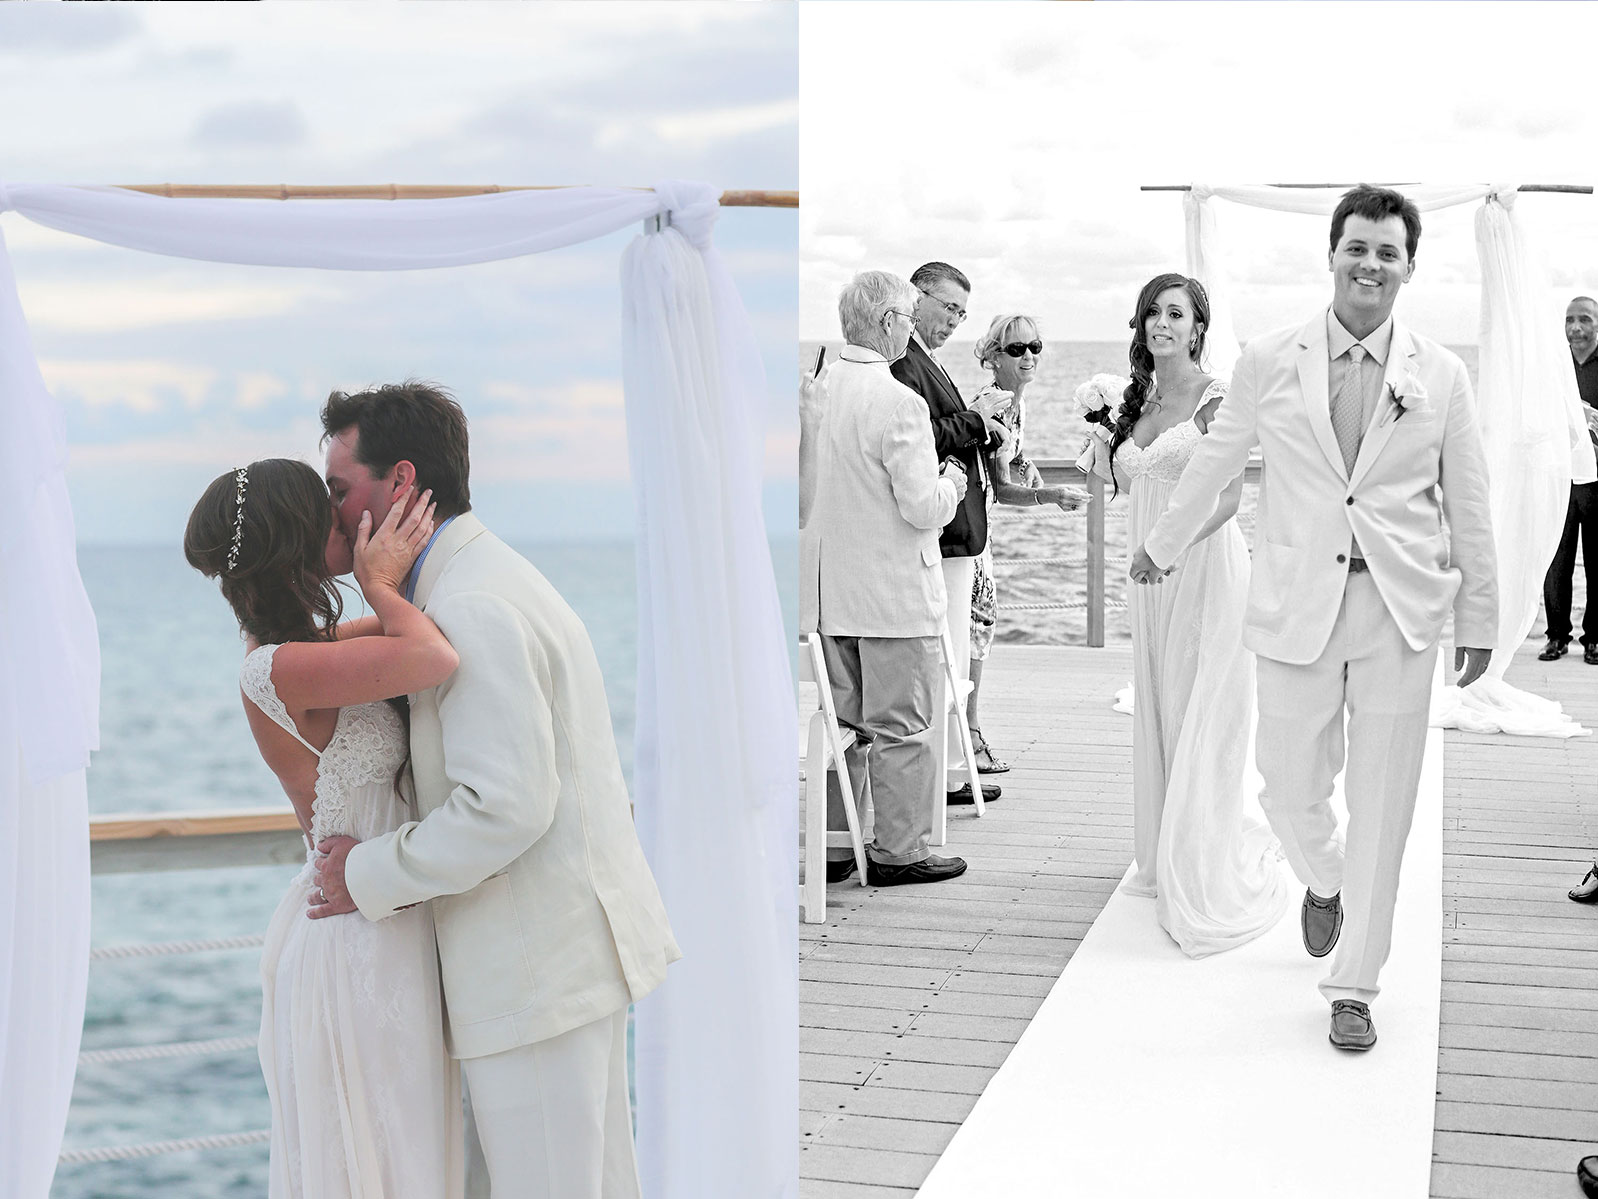 23-JM-BERMDUA-WEDDING-PHOTOGRAPHY-BRIDE-GROOM-DESTINATION-PHOTOGRAPHER-ISLAND-TROPICAL.jpg